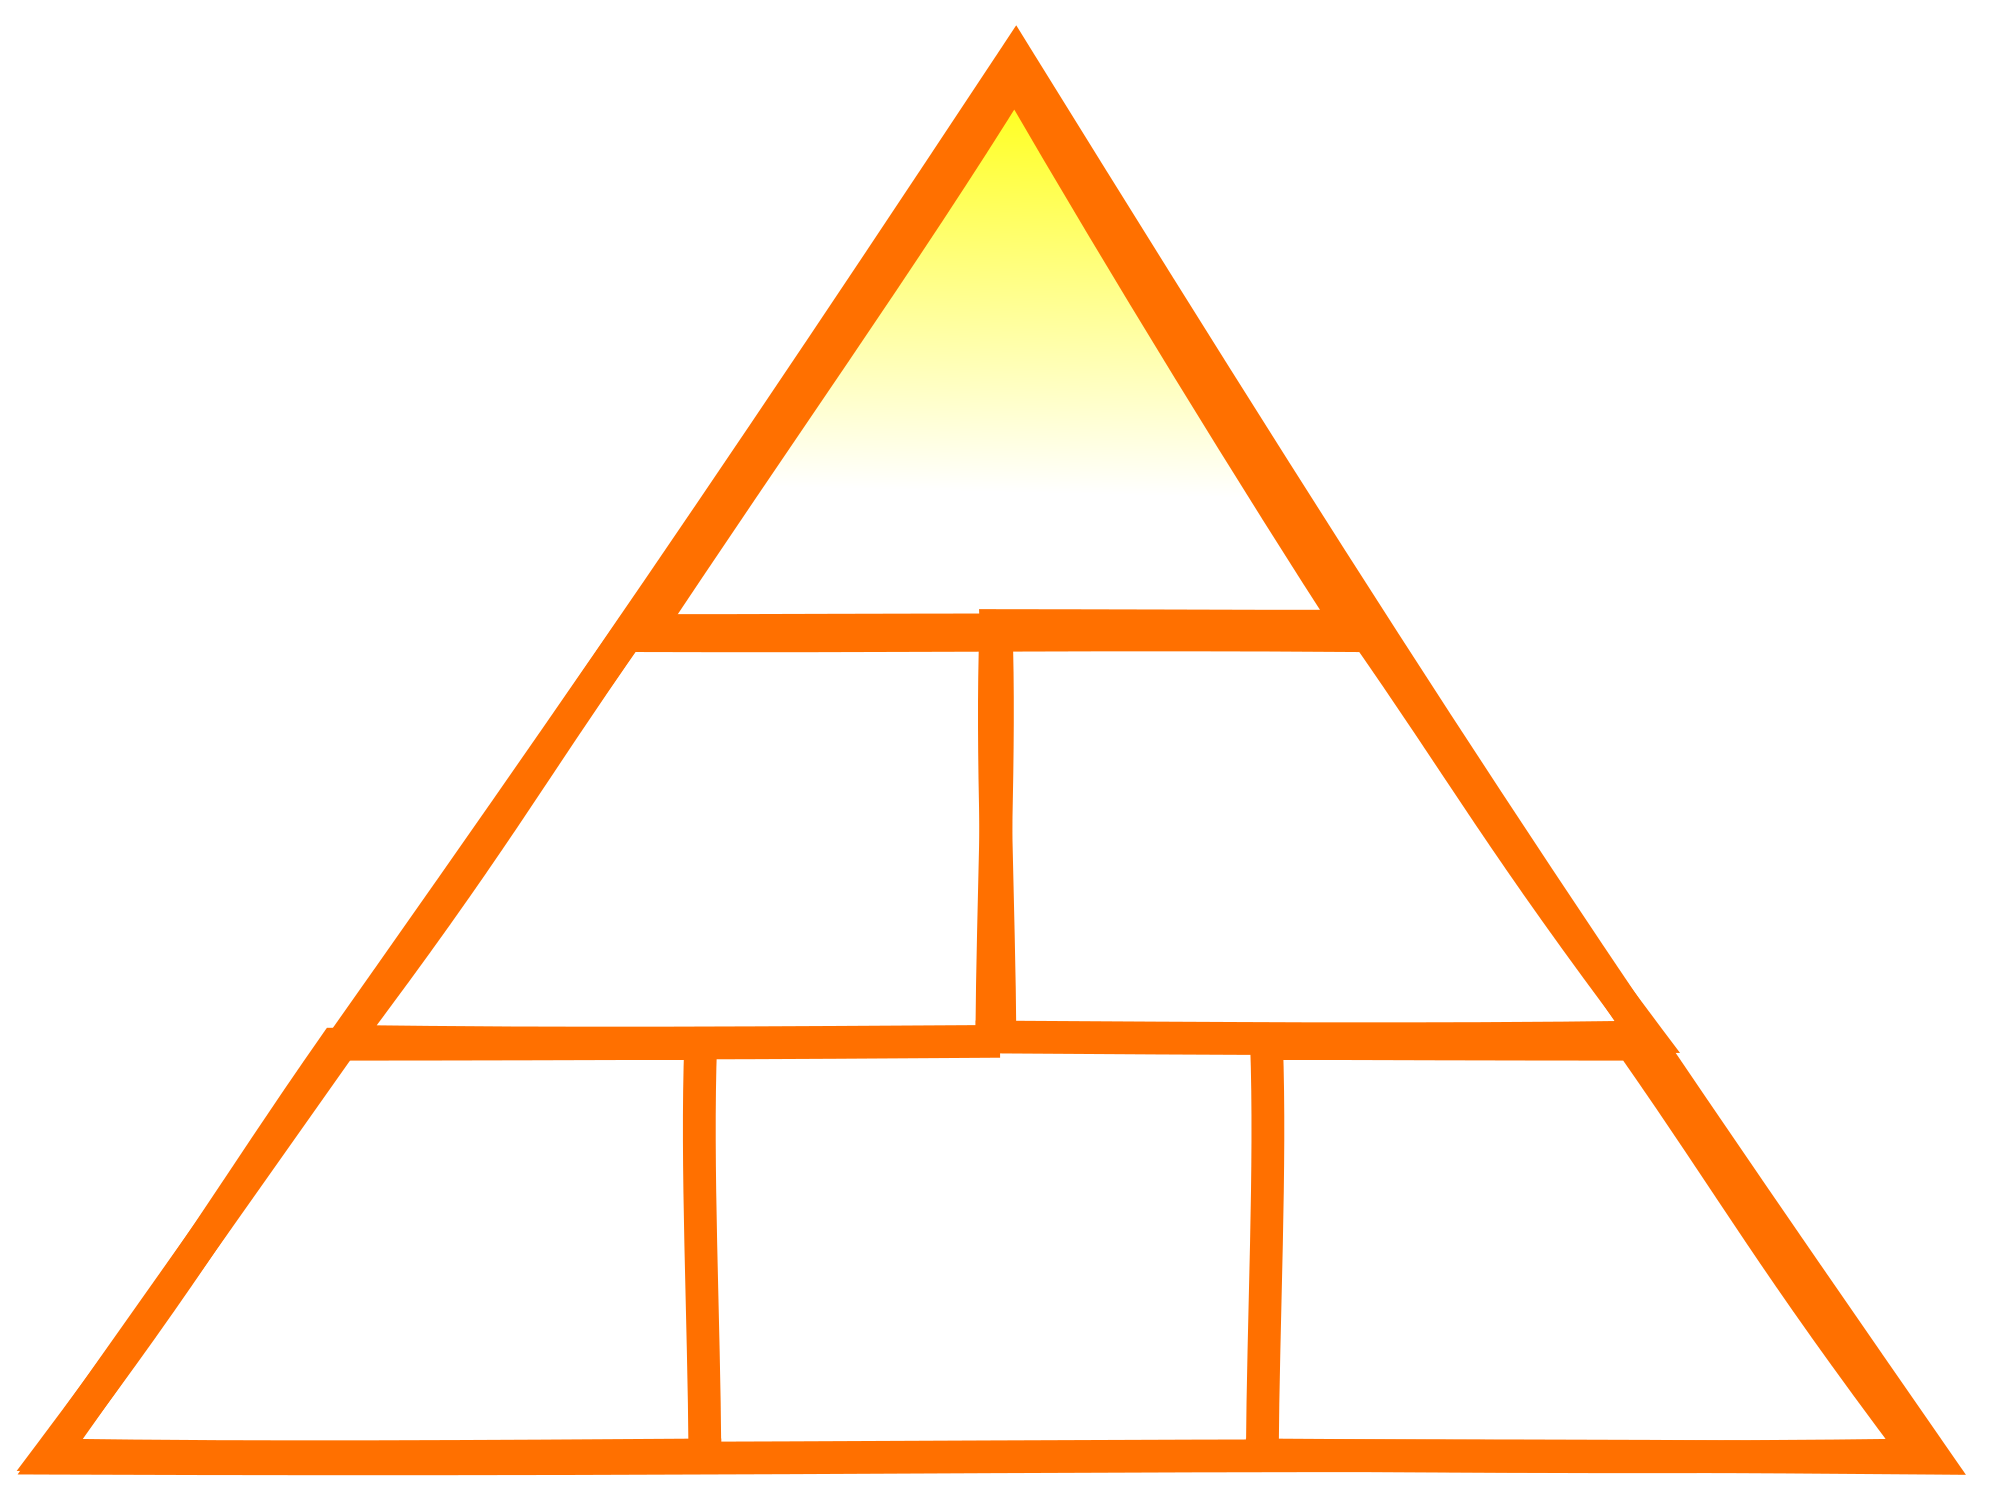 egyptian clipart triangle pyramid